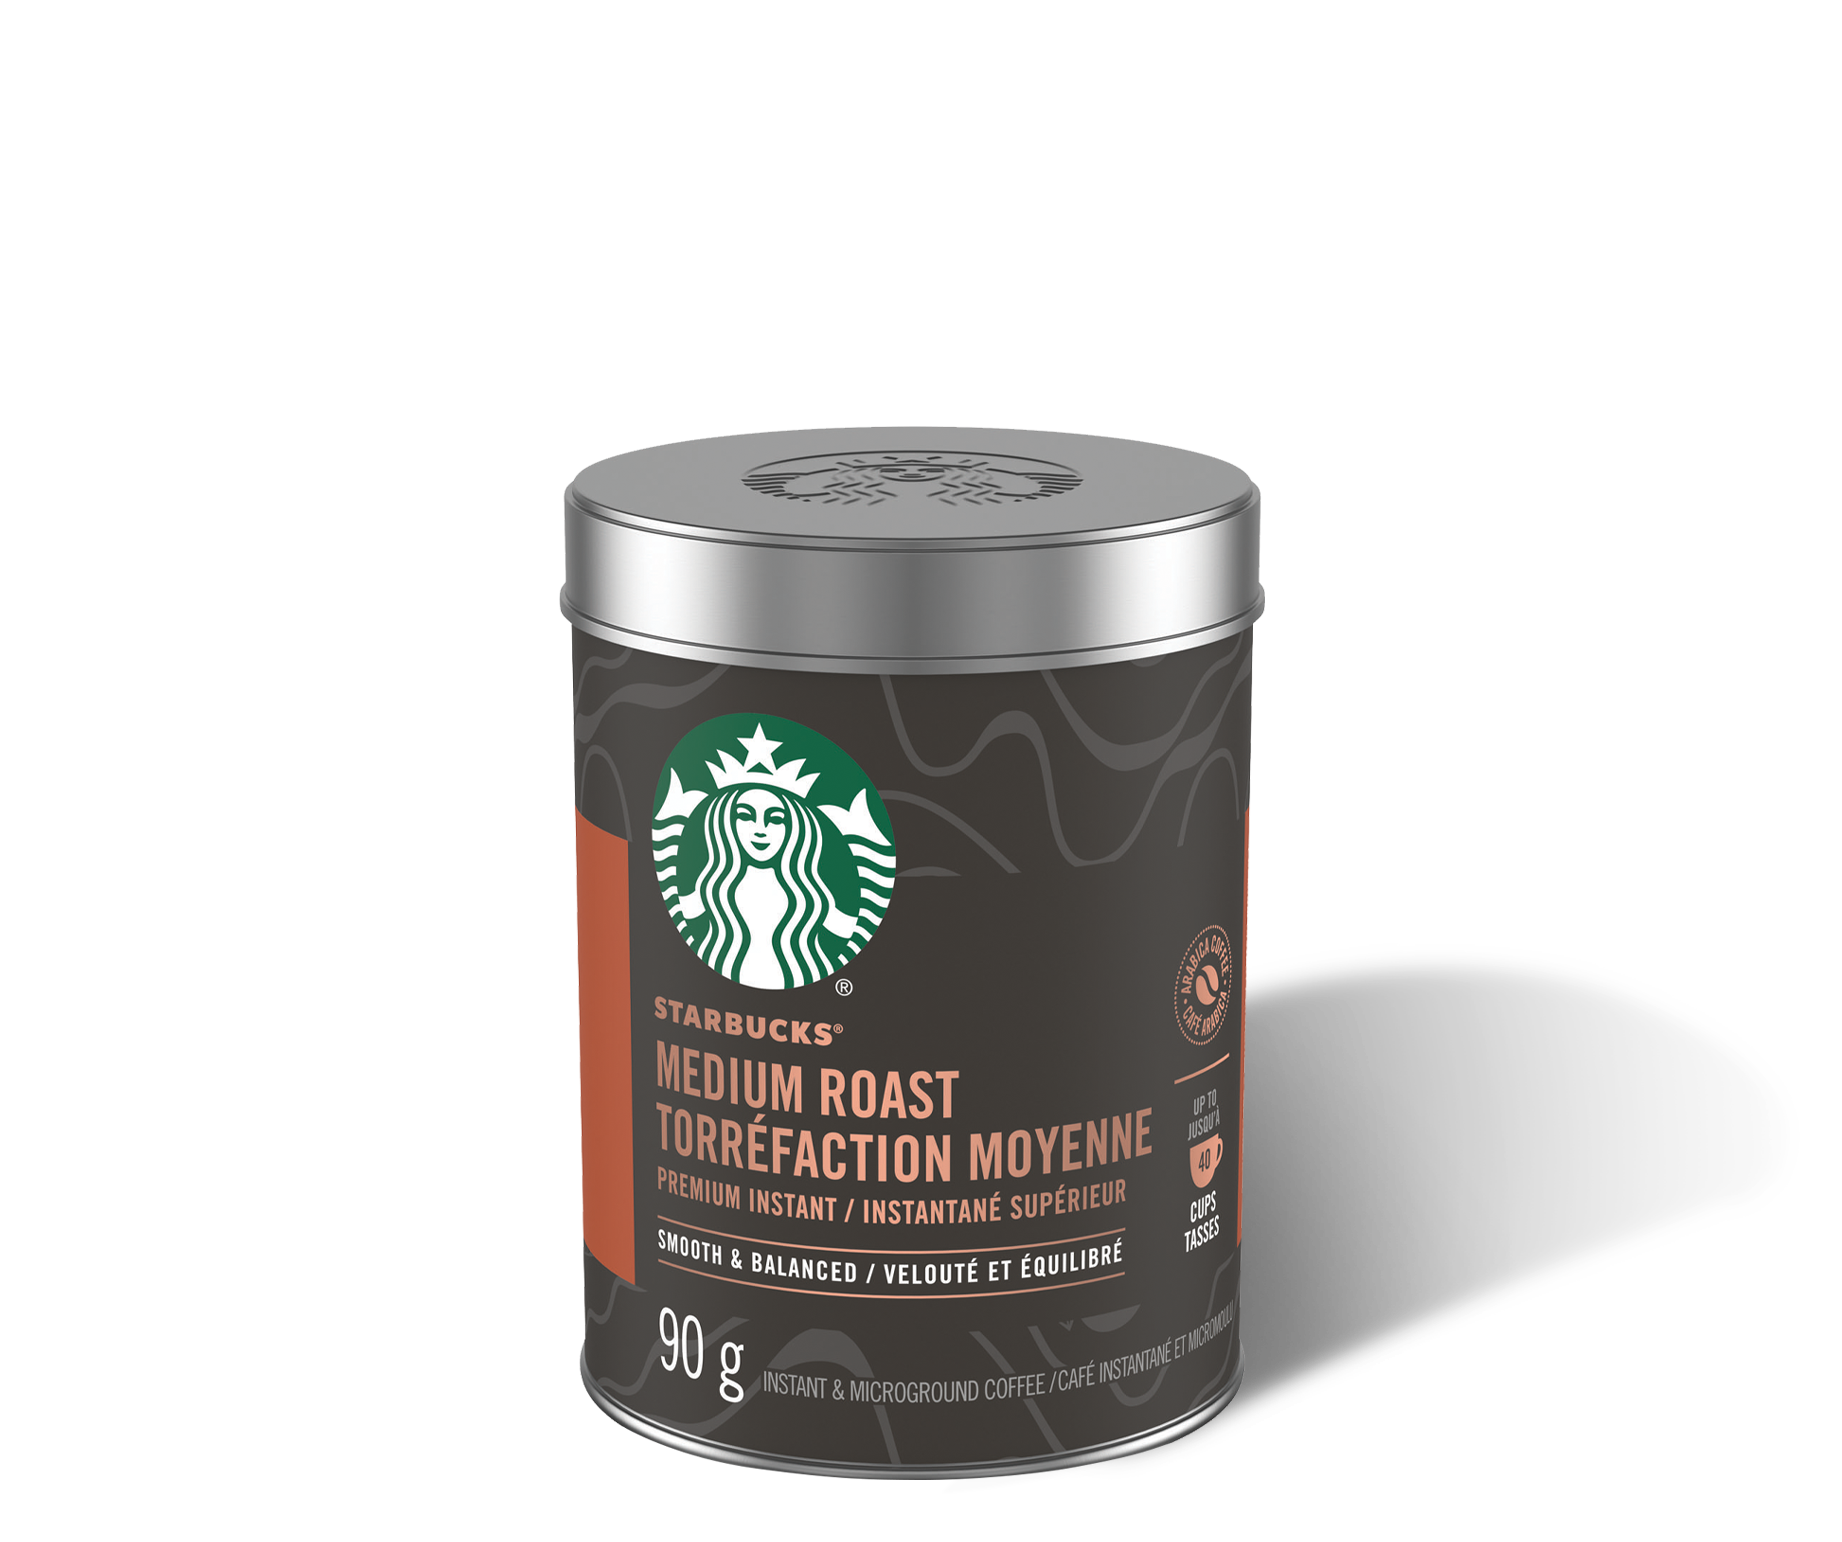 Starbucks Premium Instant 90g tin